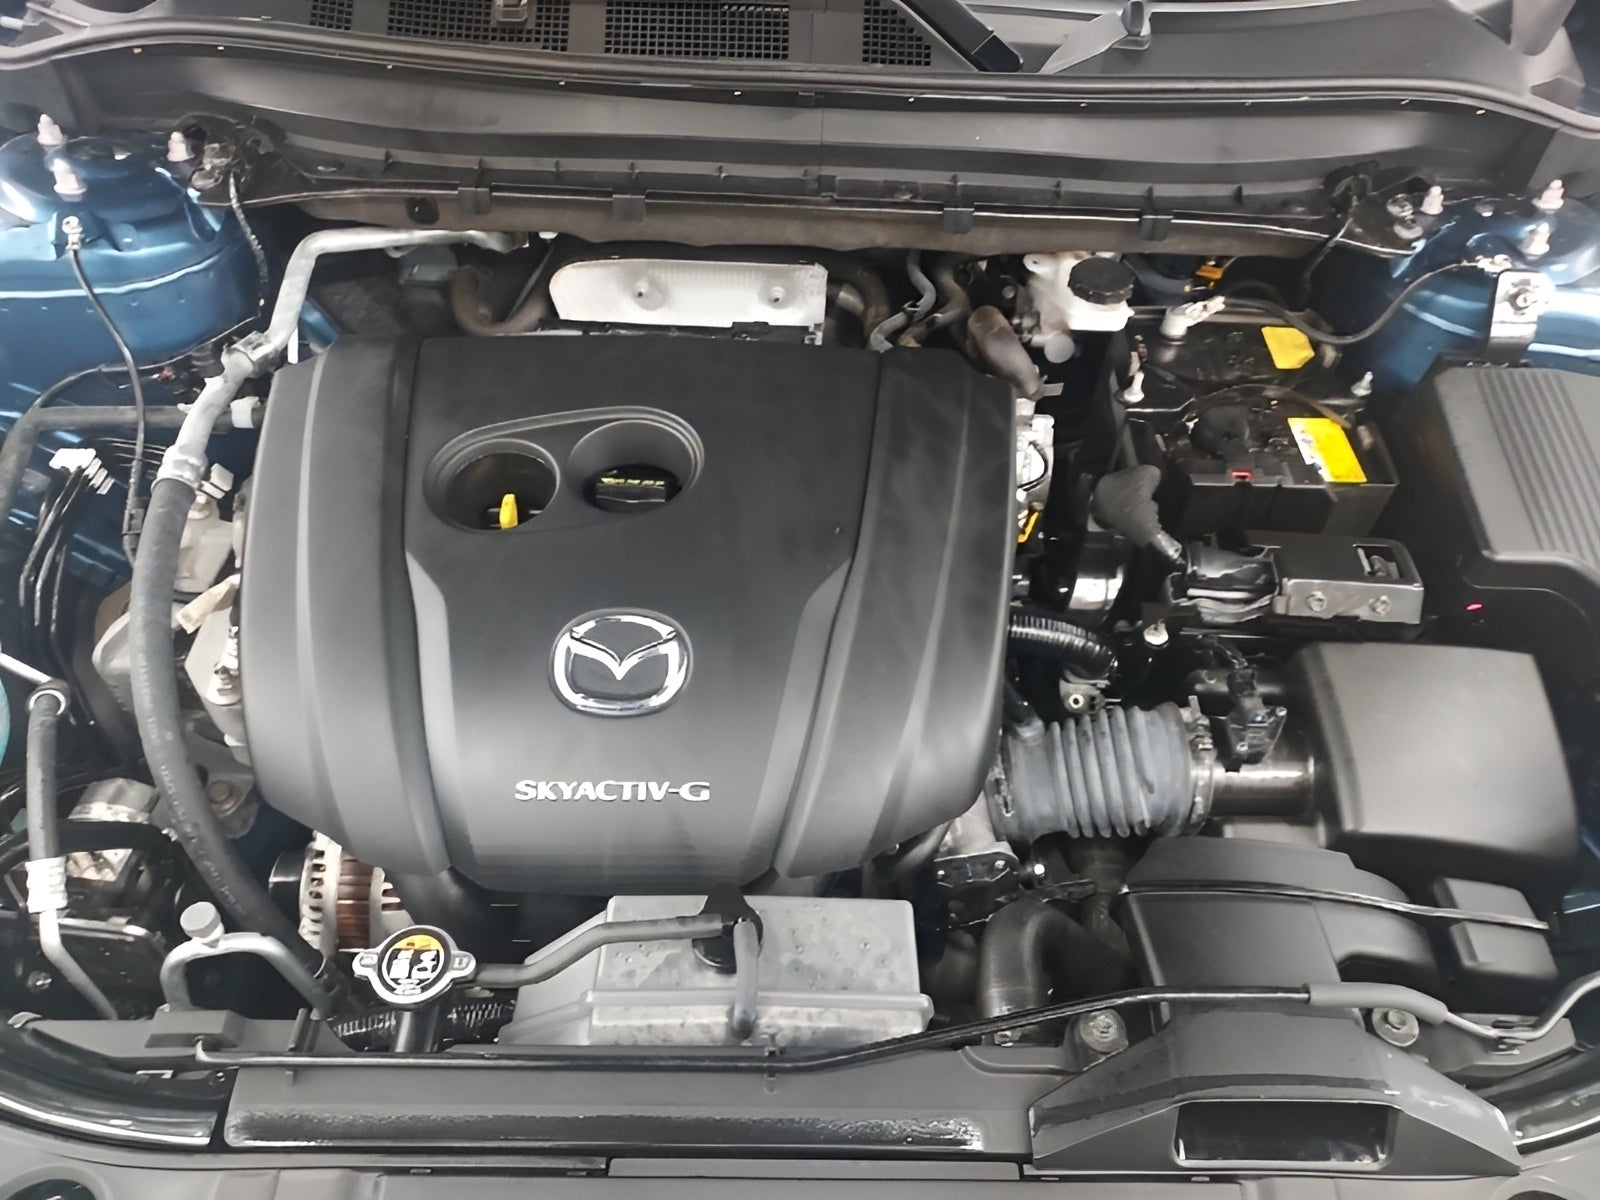 2021 Mazda Mazda CX-5 TOURING AWD